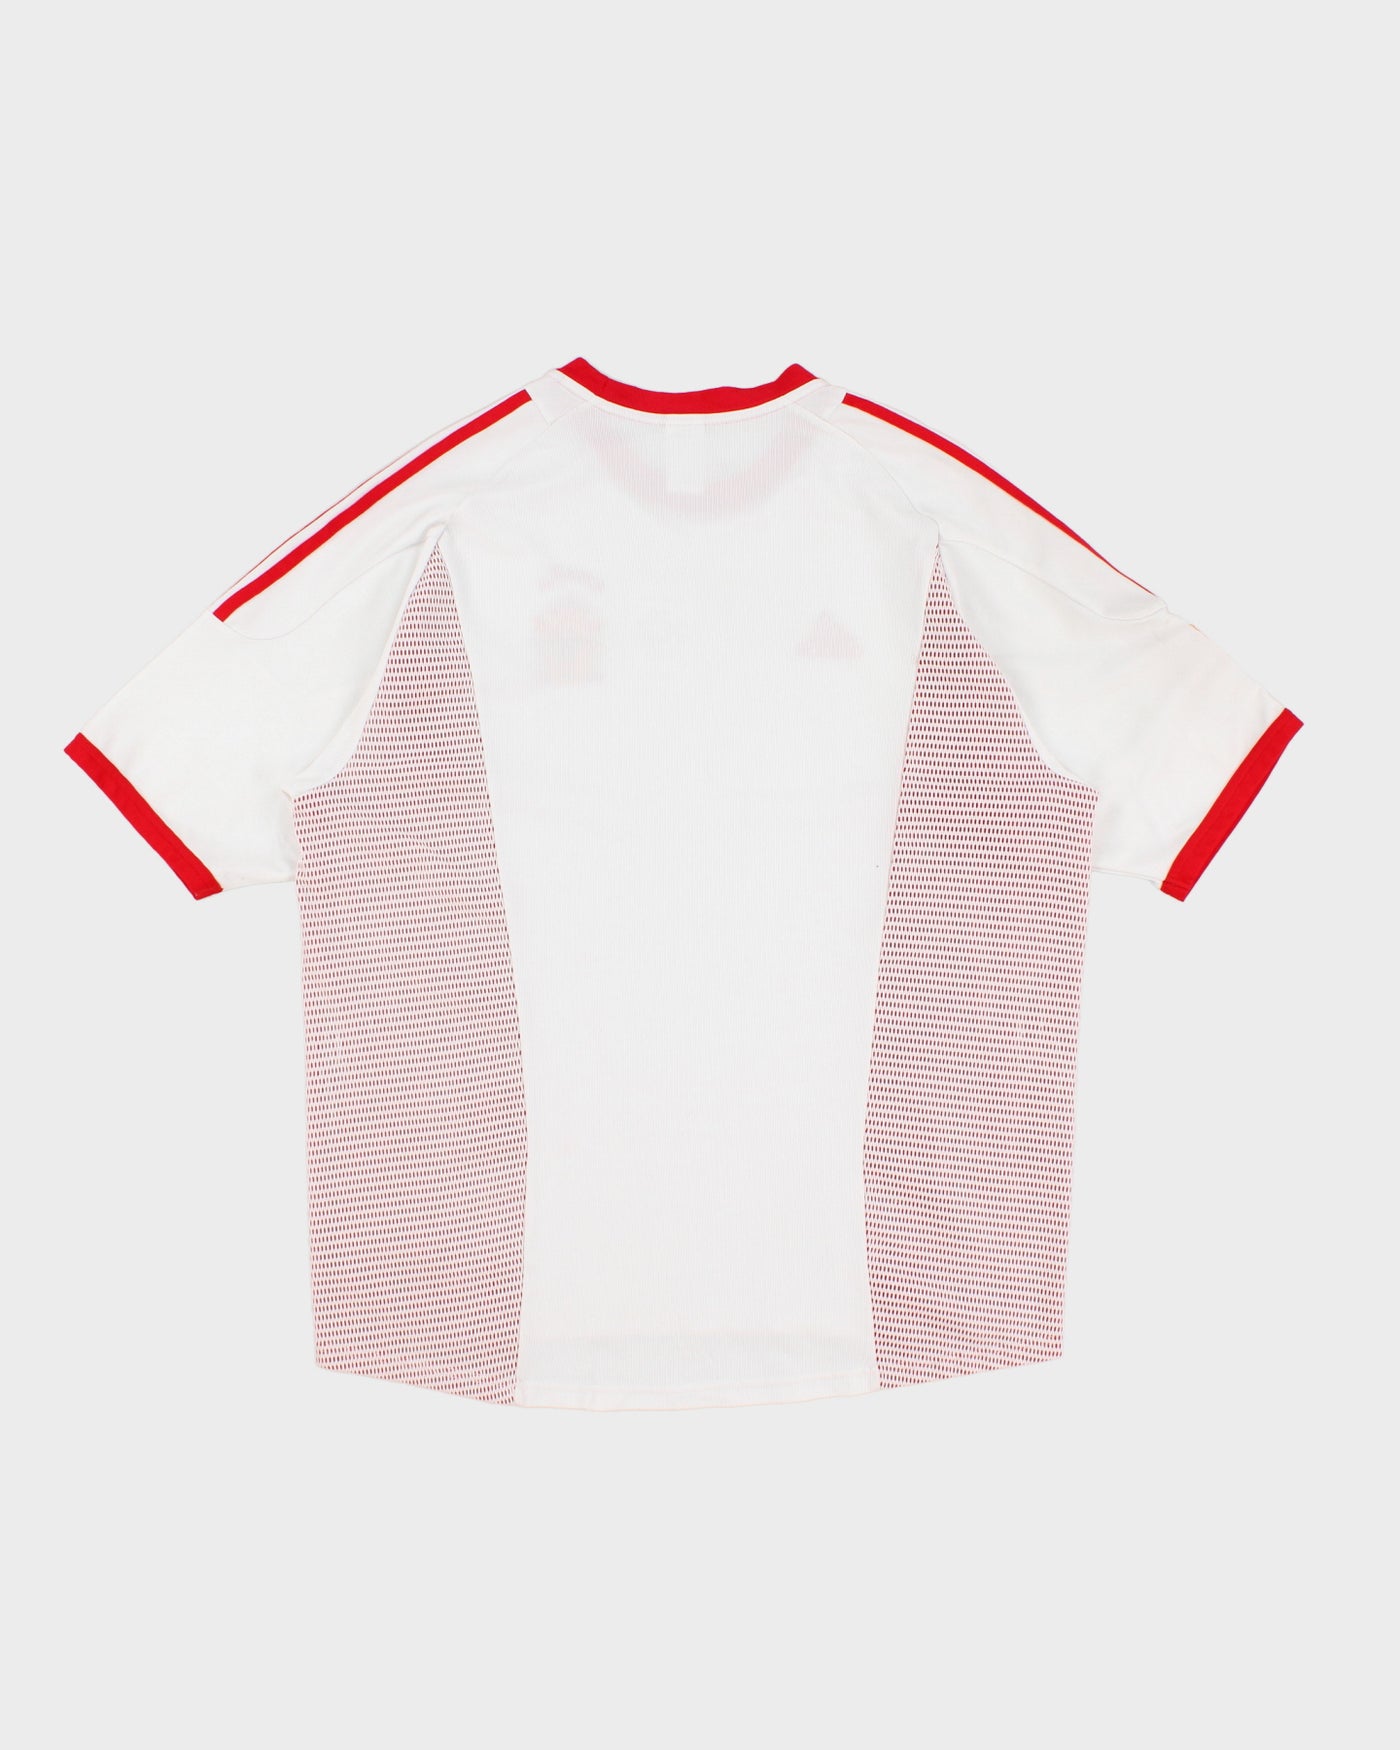 00s Adidas Spain Football Shirt - XL